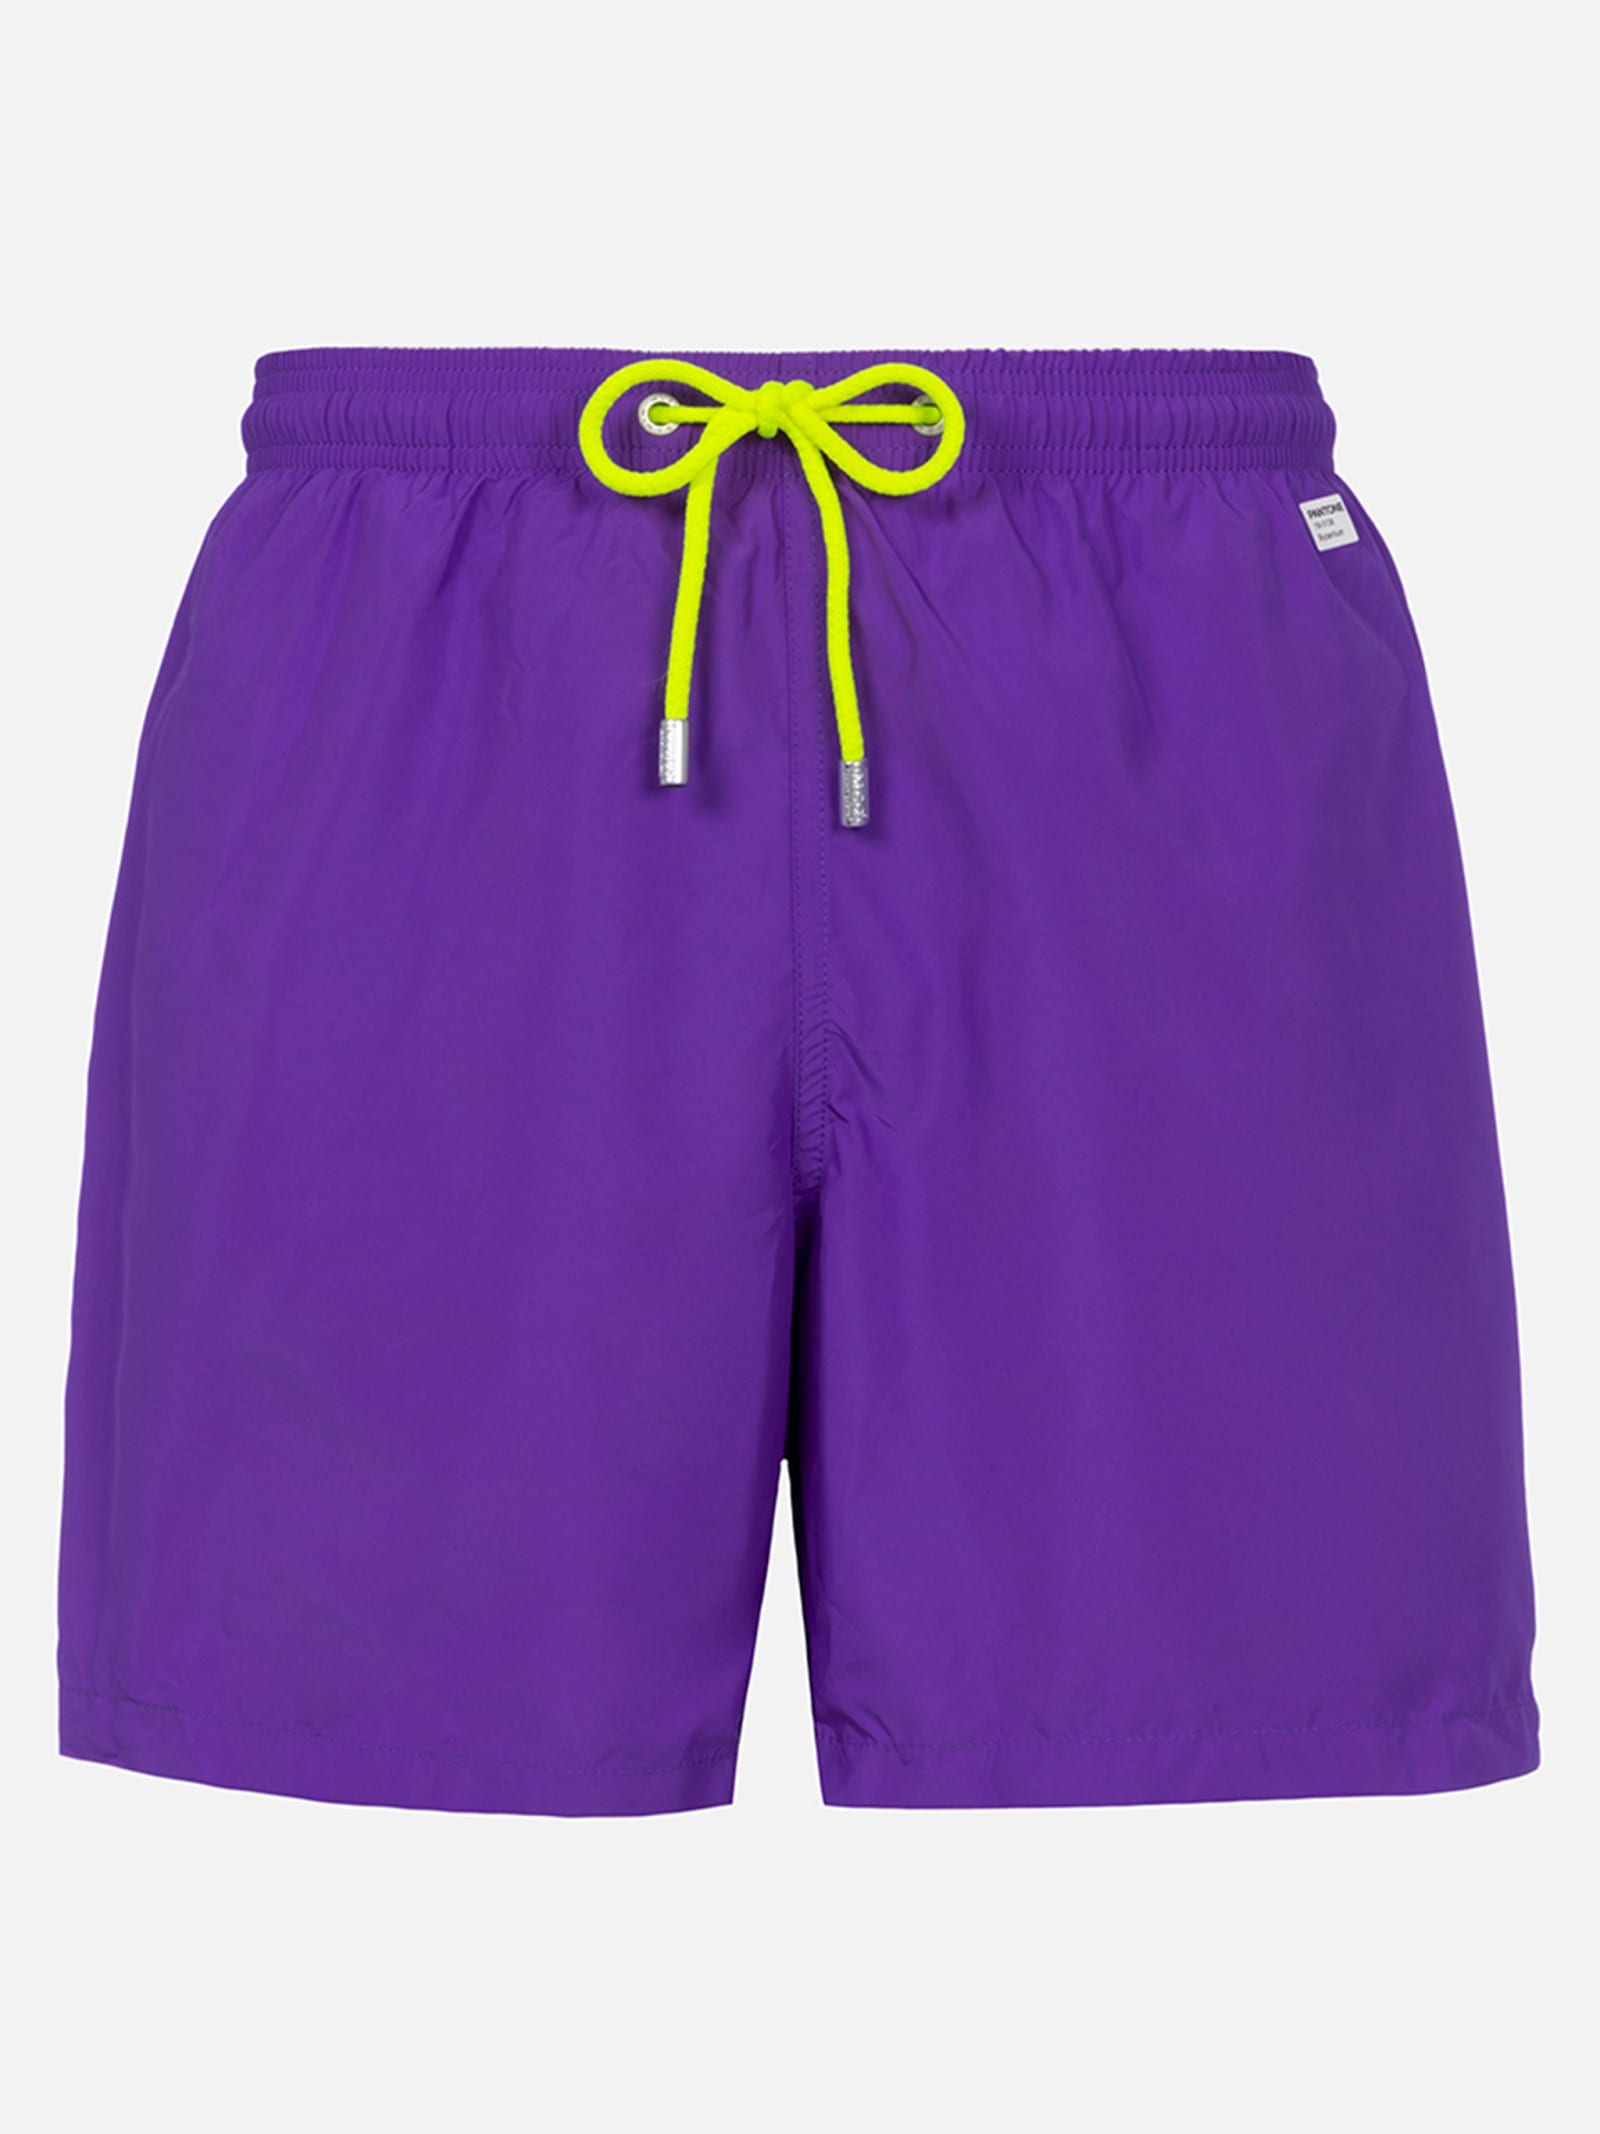 Man Lightweight Fabric Purple Swim-shorts Lighting Pantone Pantone Special Edition